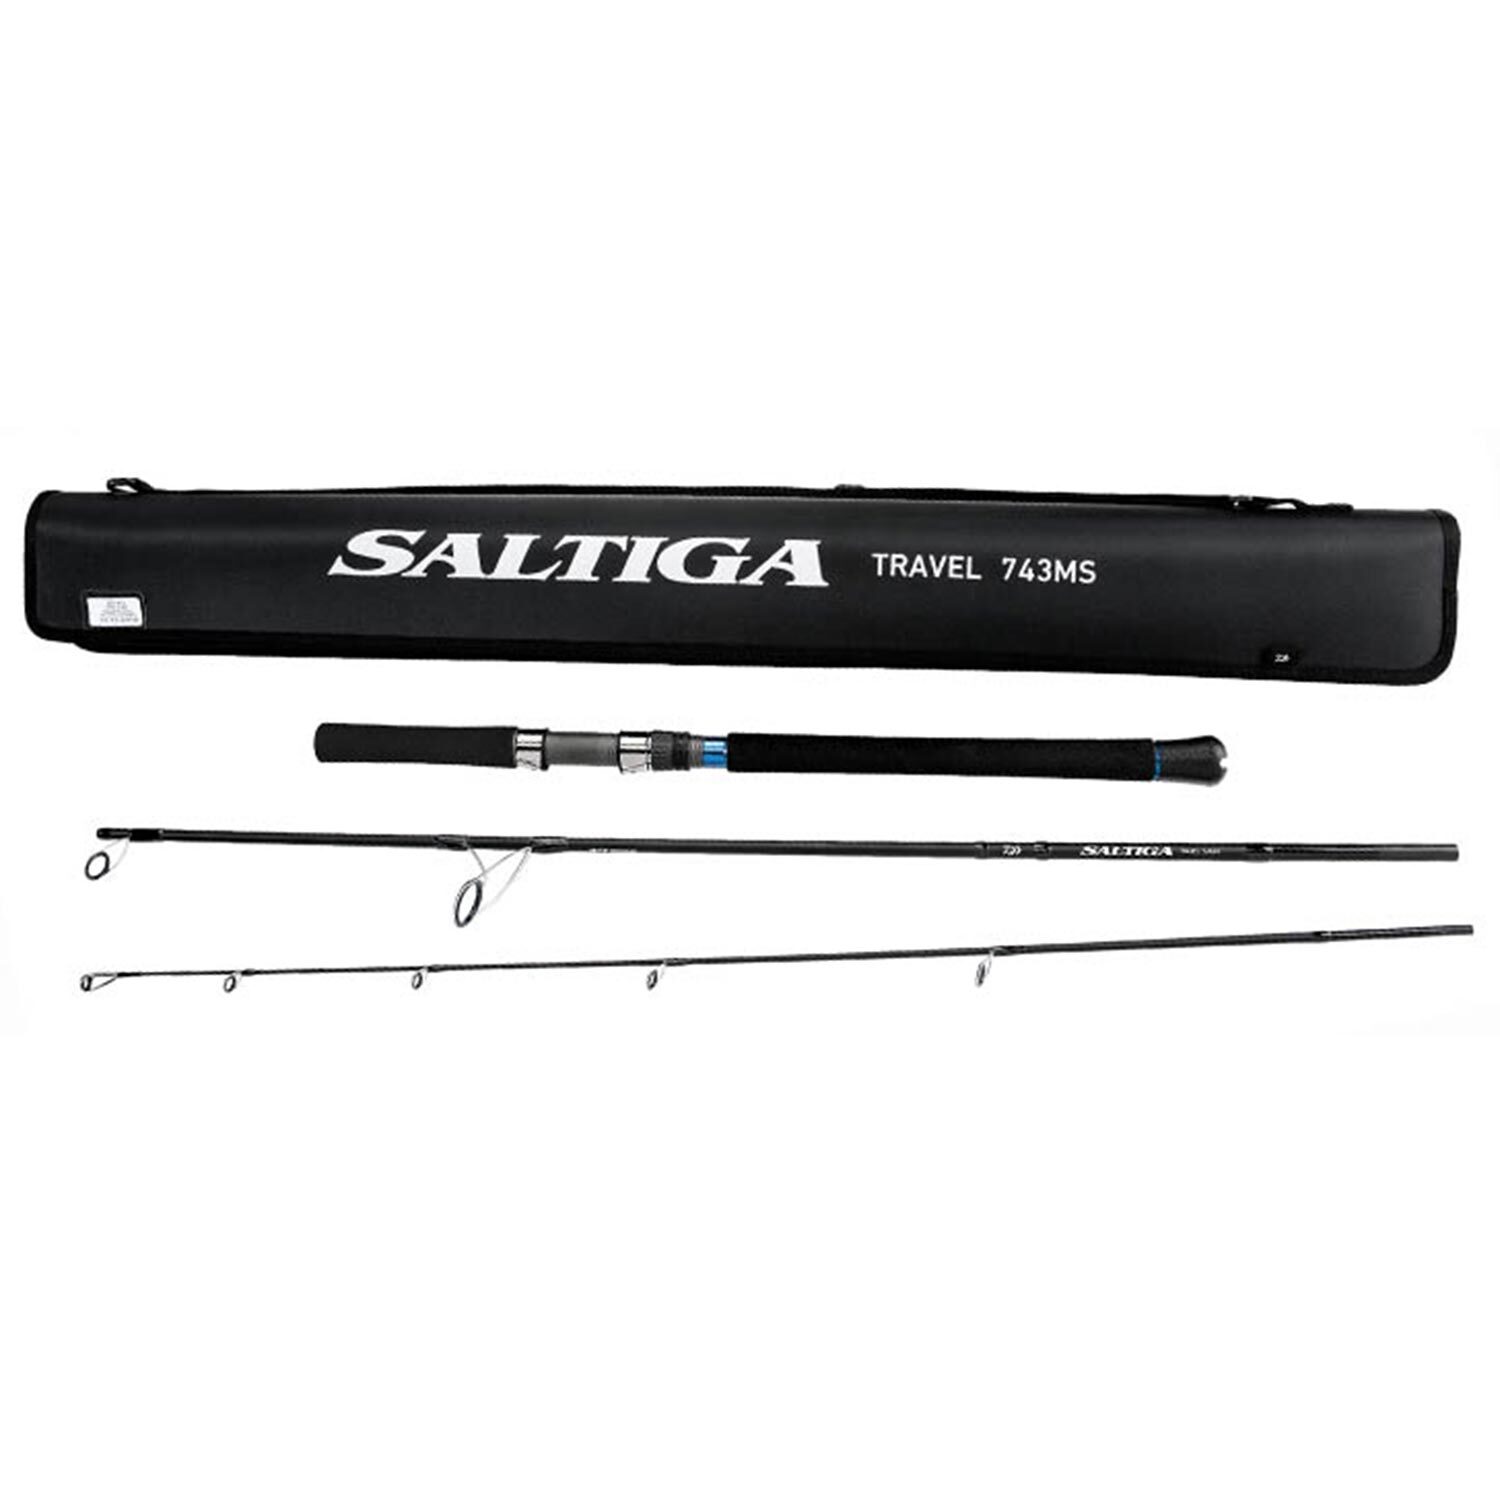 DAIWA 7'4 Saltiga Saltwater Travel Spinning Rod